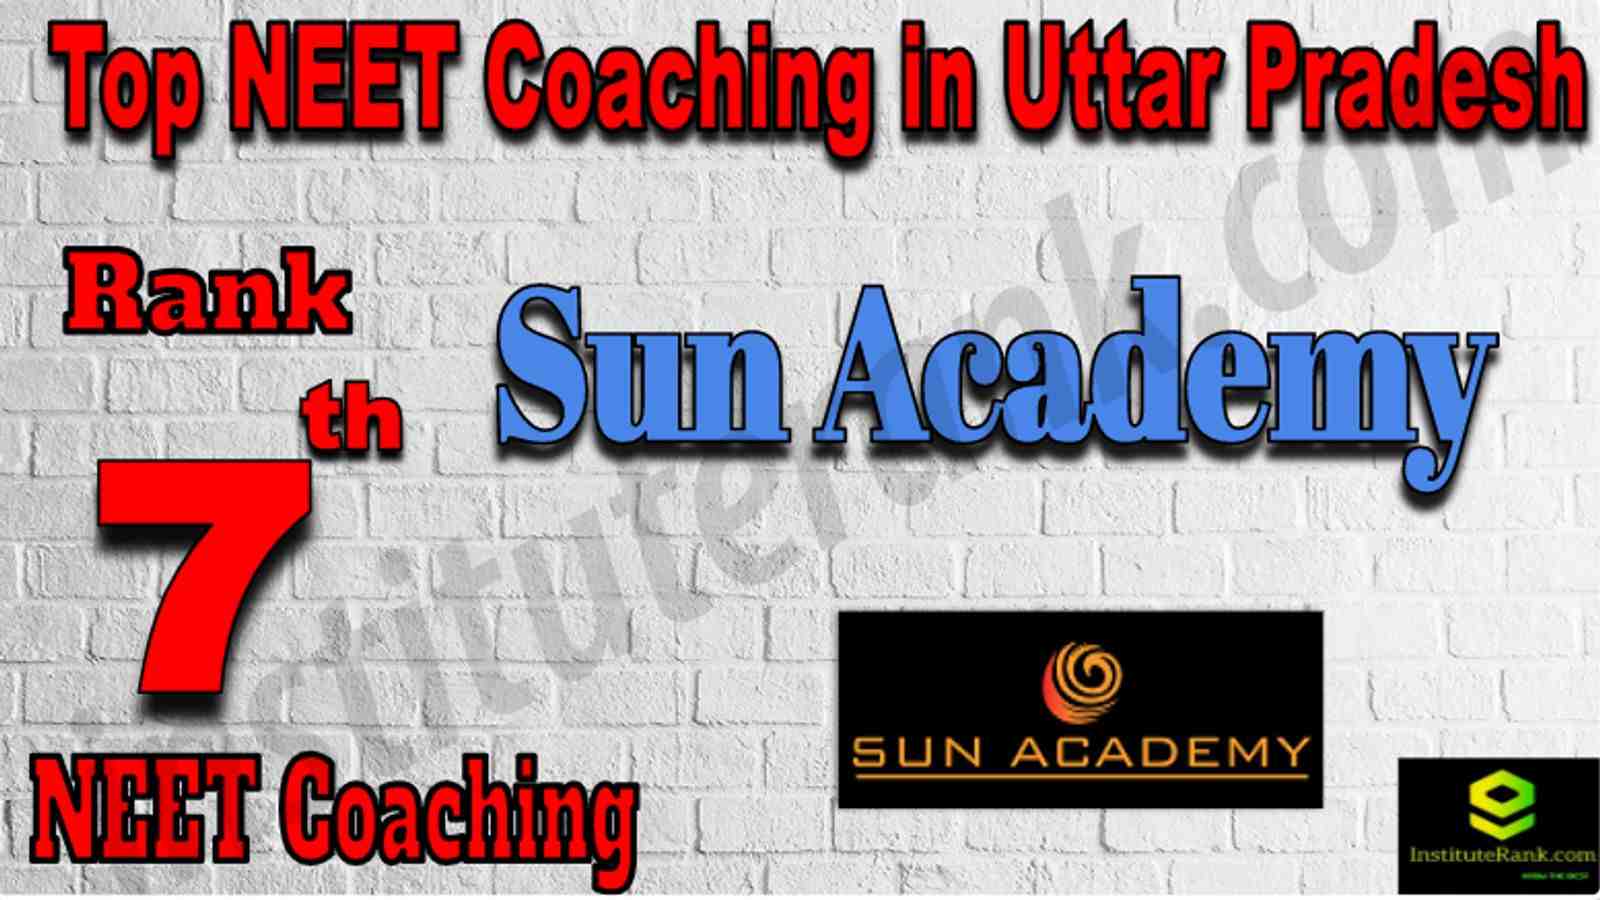 Rank 7 Top NEET Coaching in Uttar Pradesh